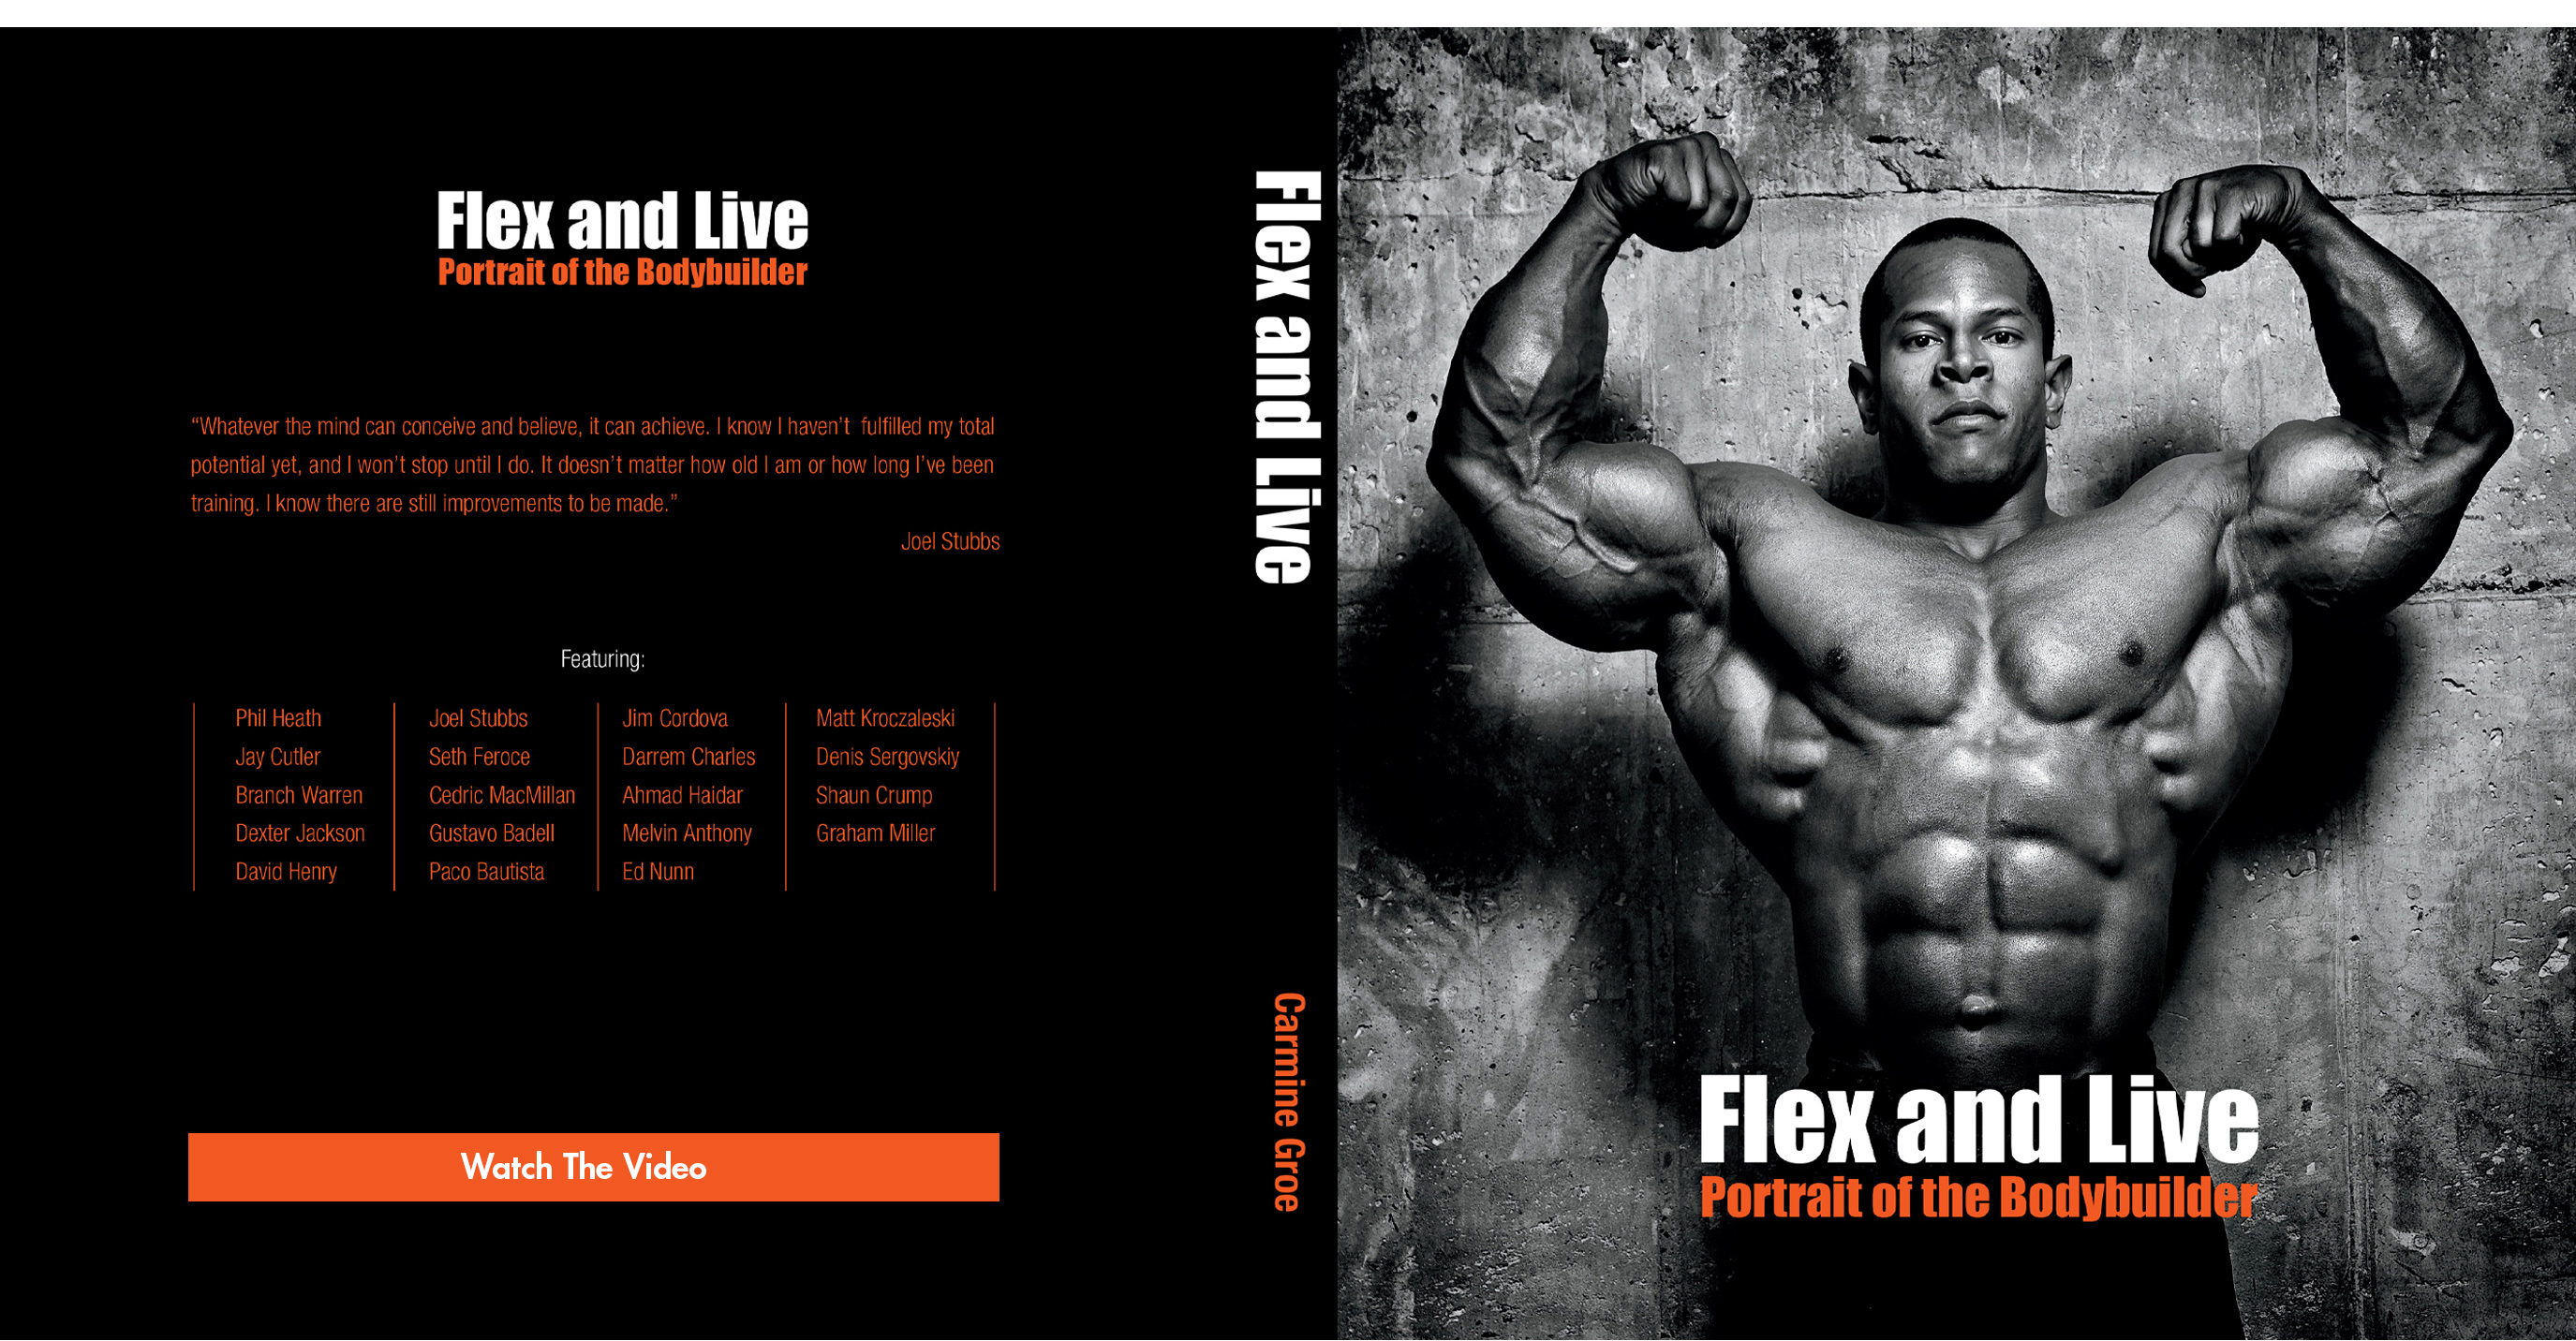 Flex and Live Book, portrait of the bodybuilder